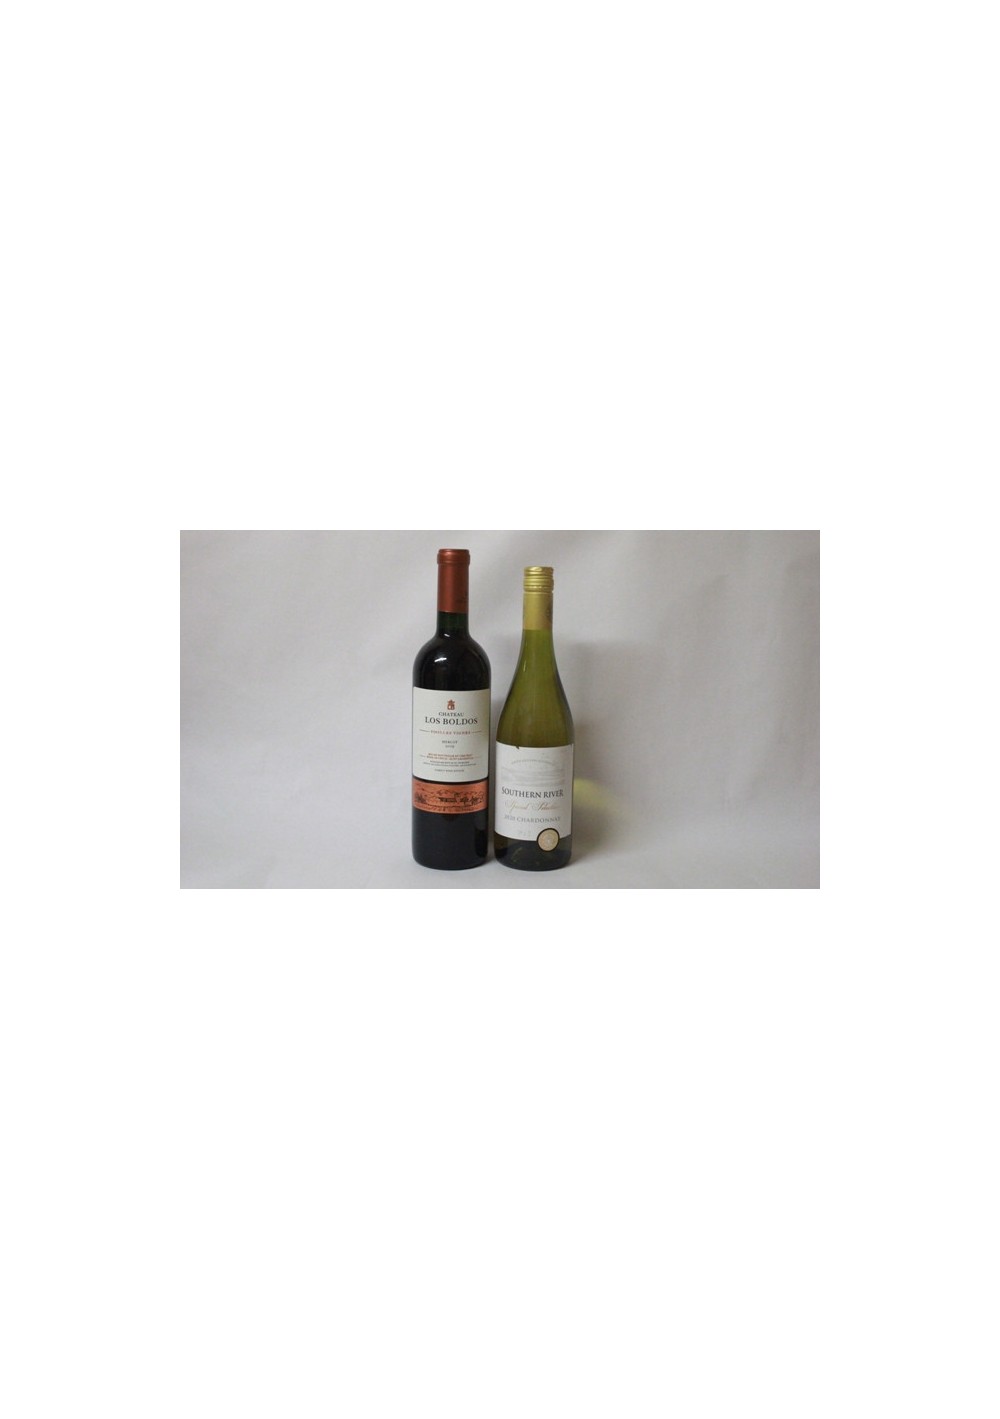 Chilie - Merlot 2009 - Australie Chardonnay 2020